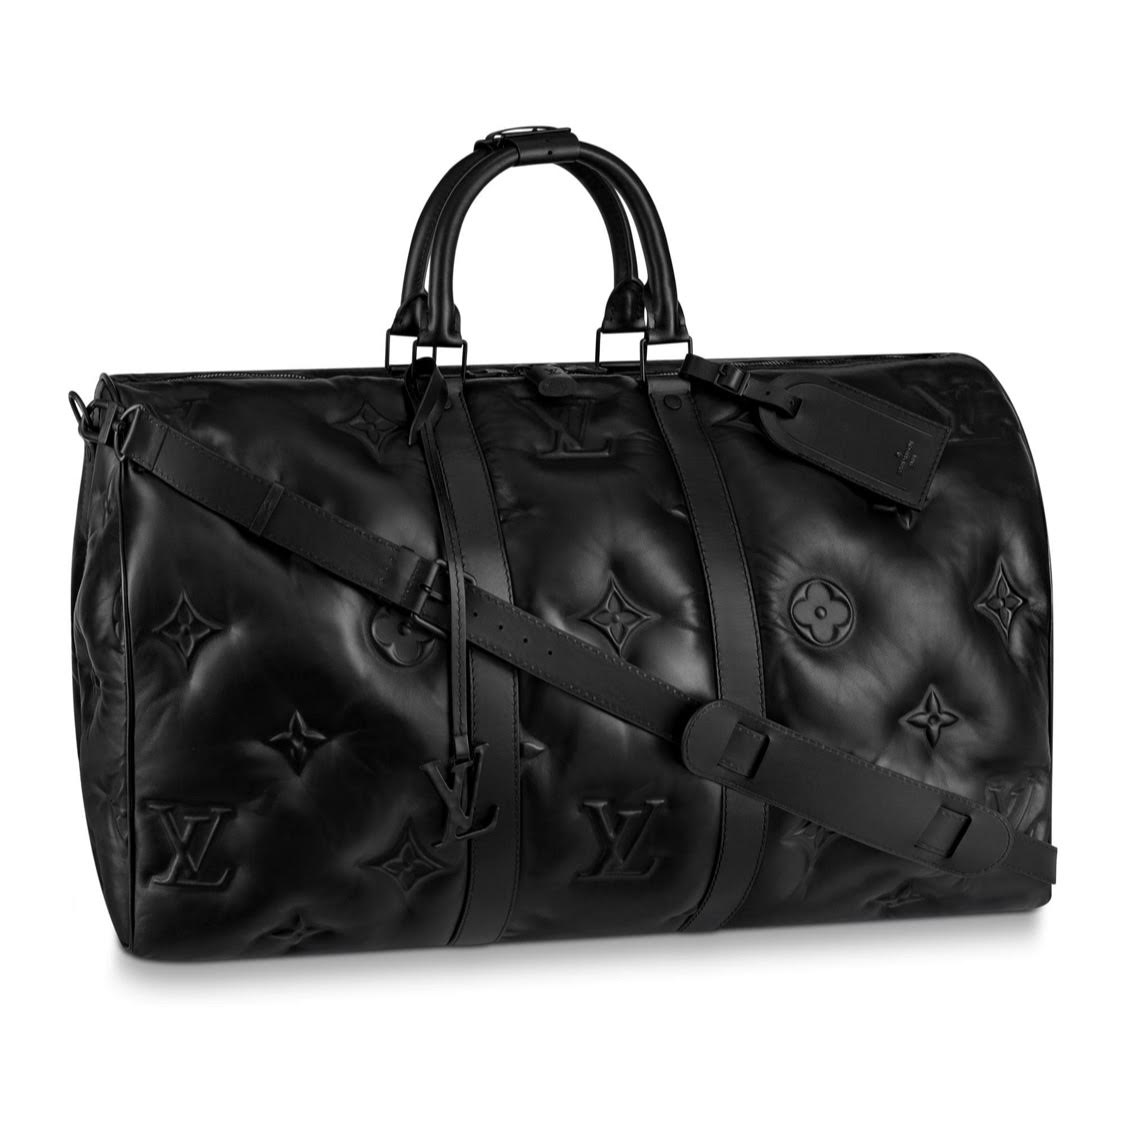 Puffer Louis Vuitton Black size L International in Polyester - 31138911